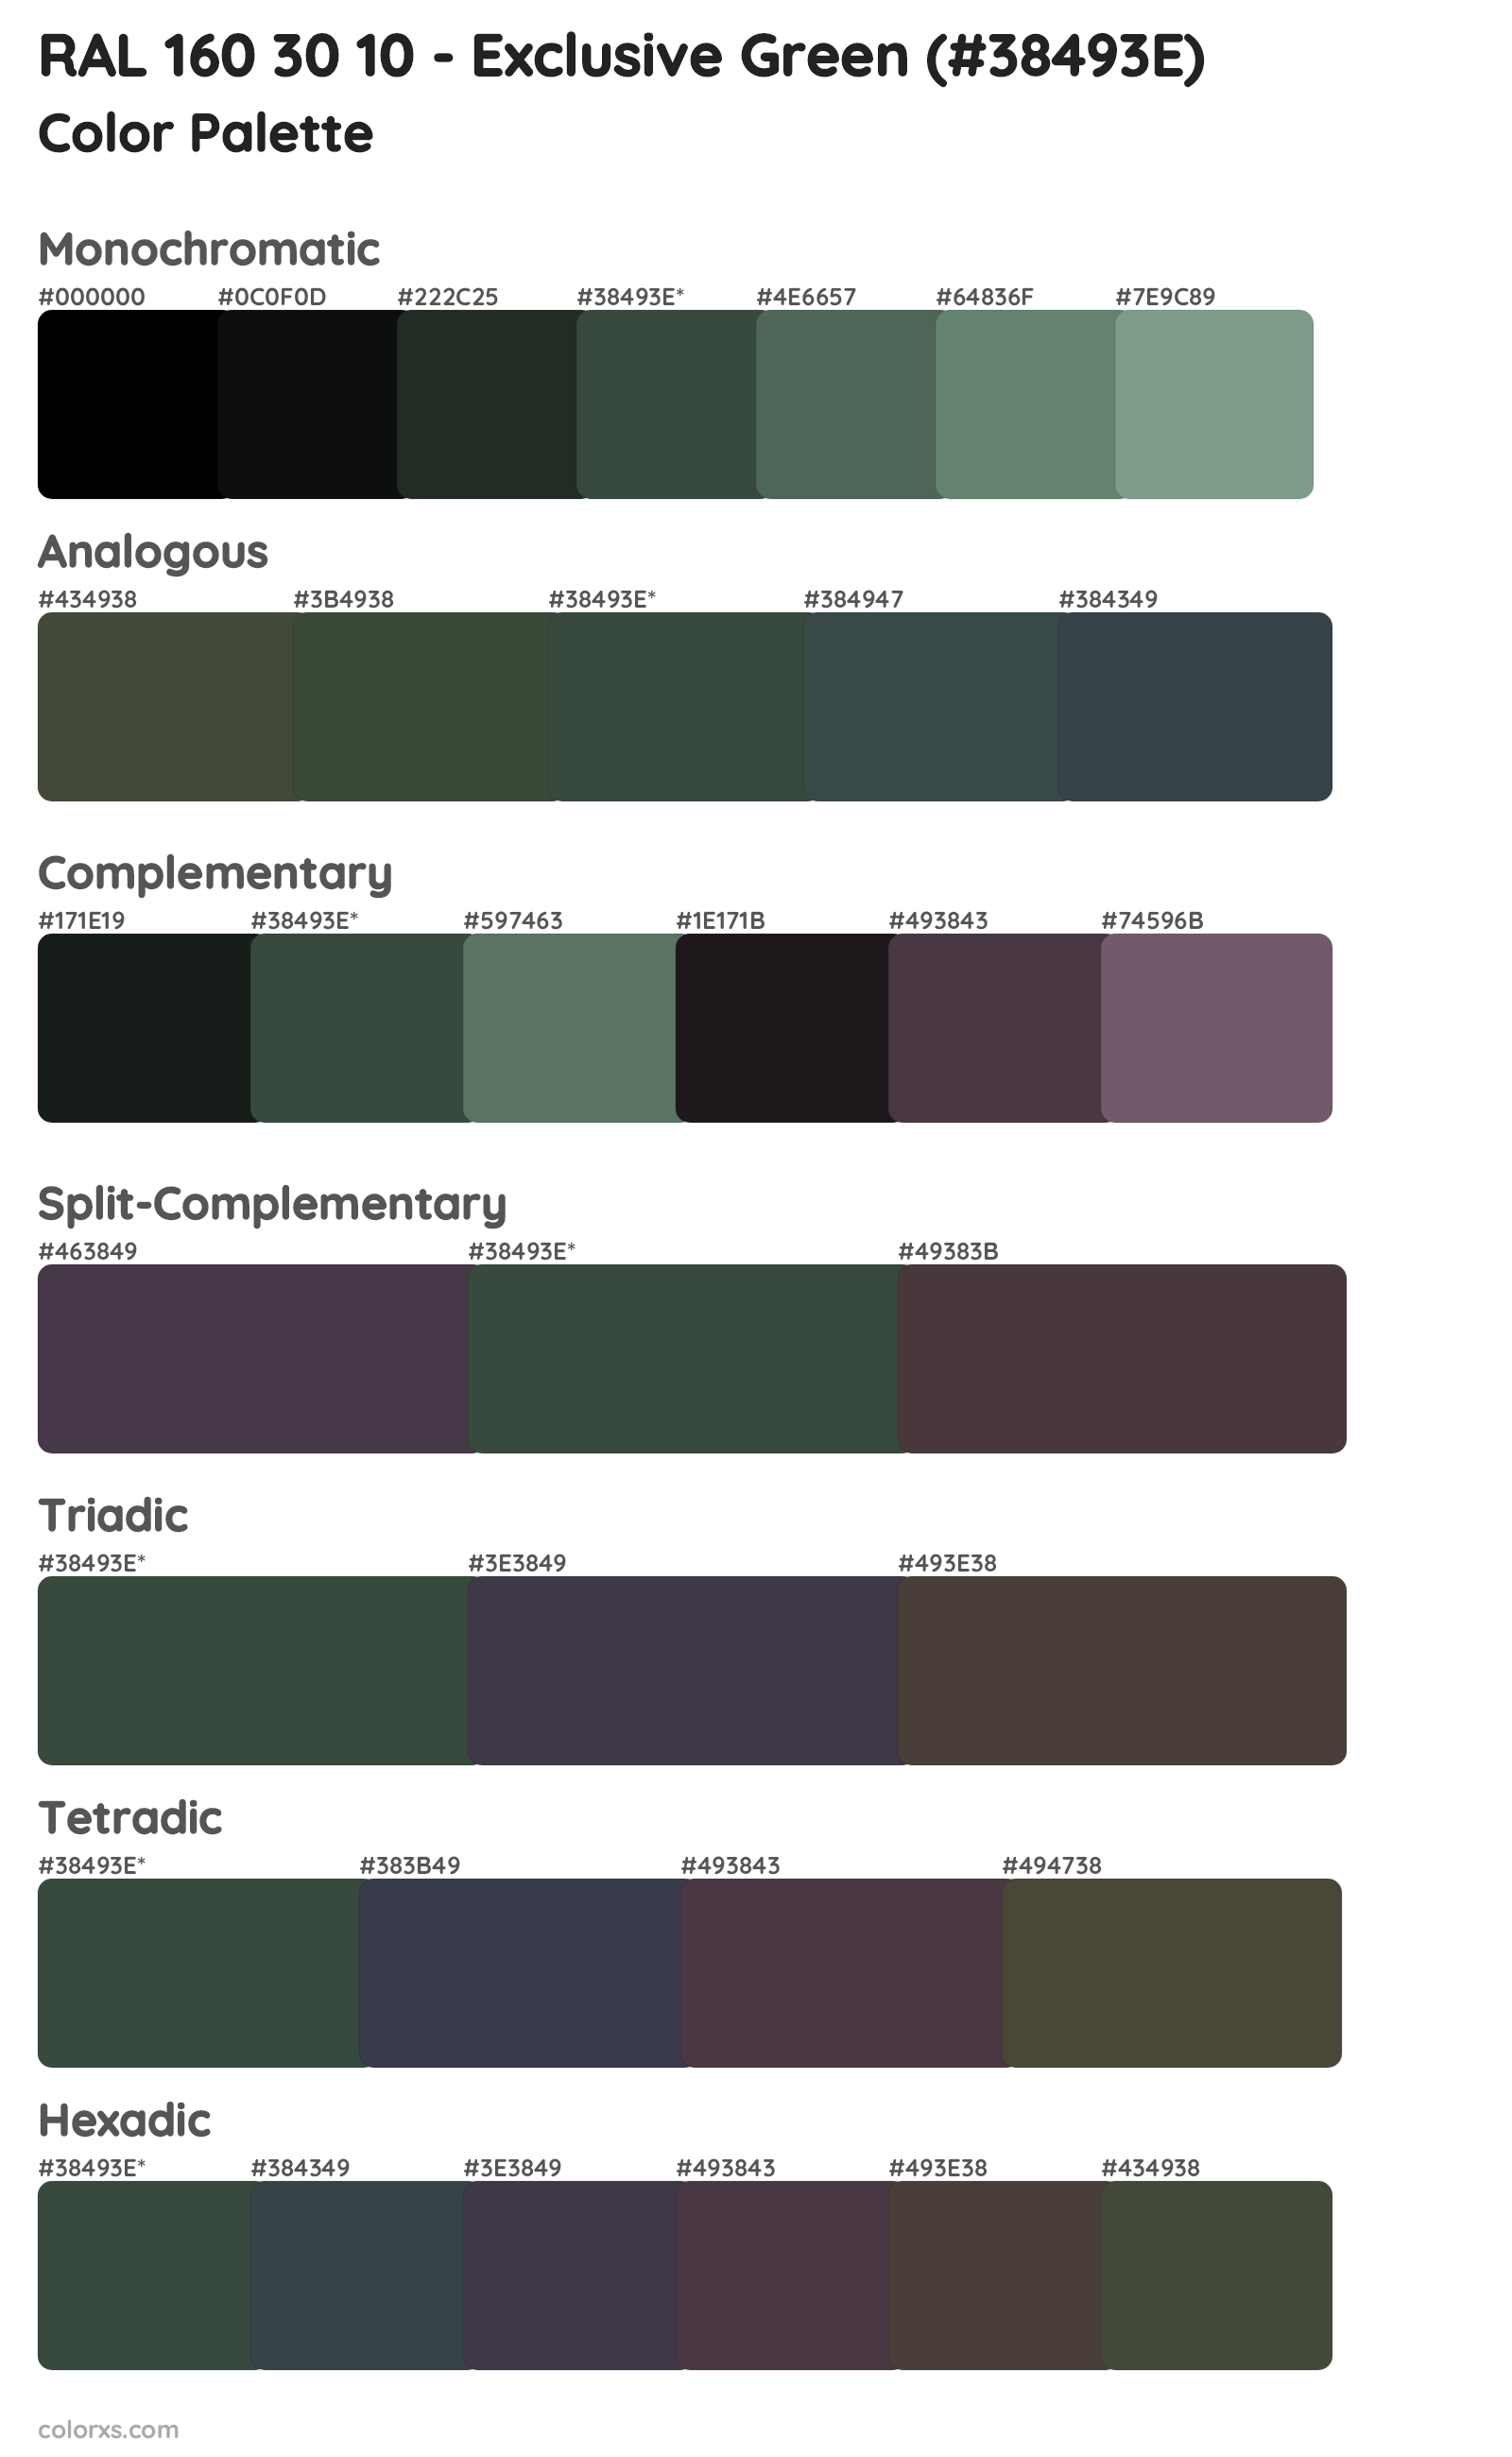 RAL 160 30 10 - Exclusive Green Color Scheme Palettes